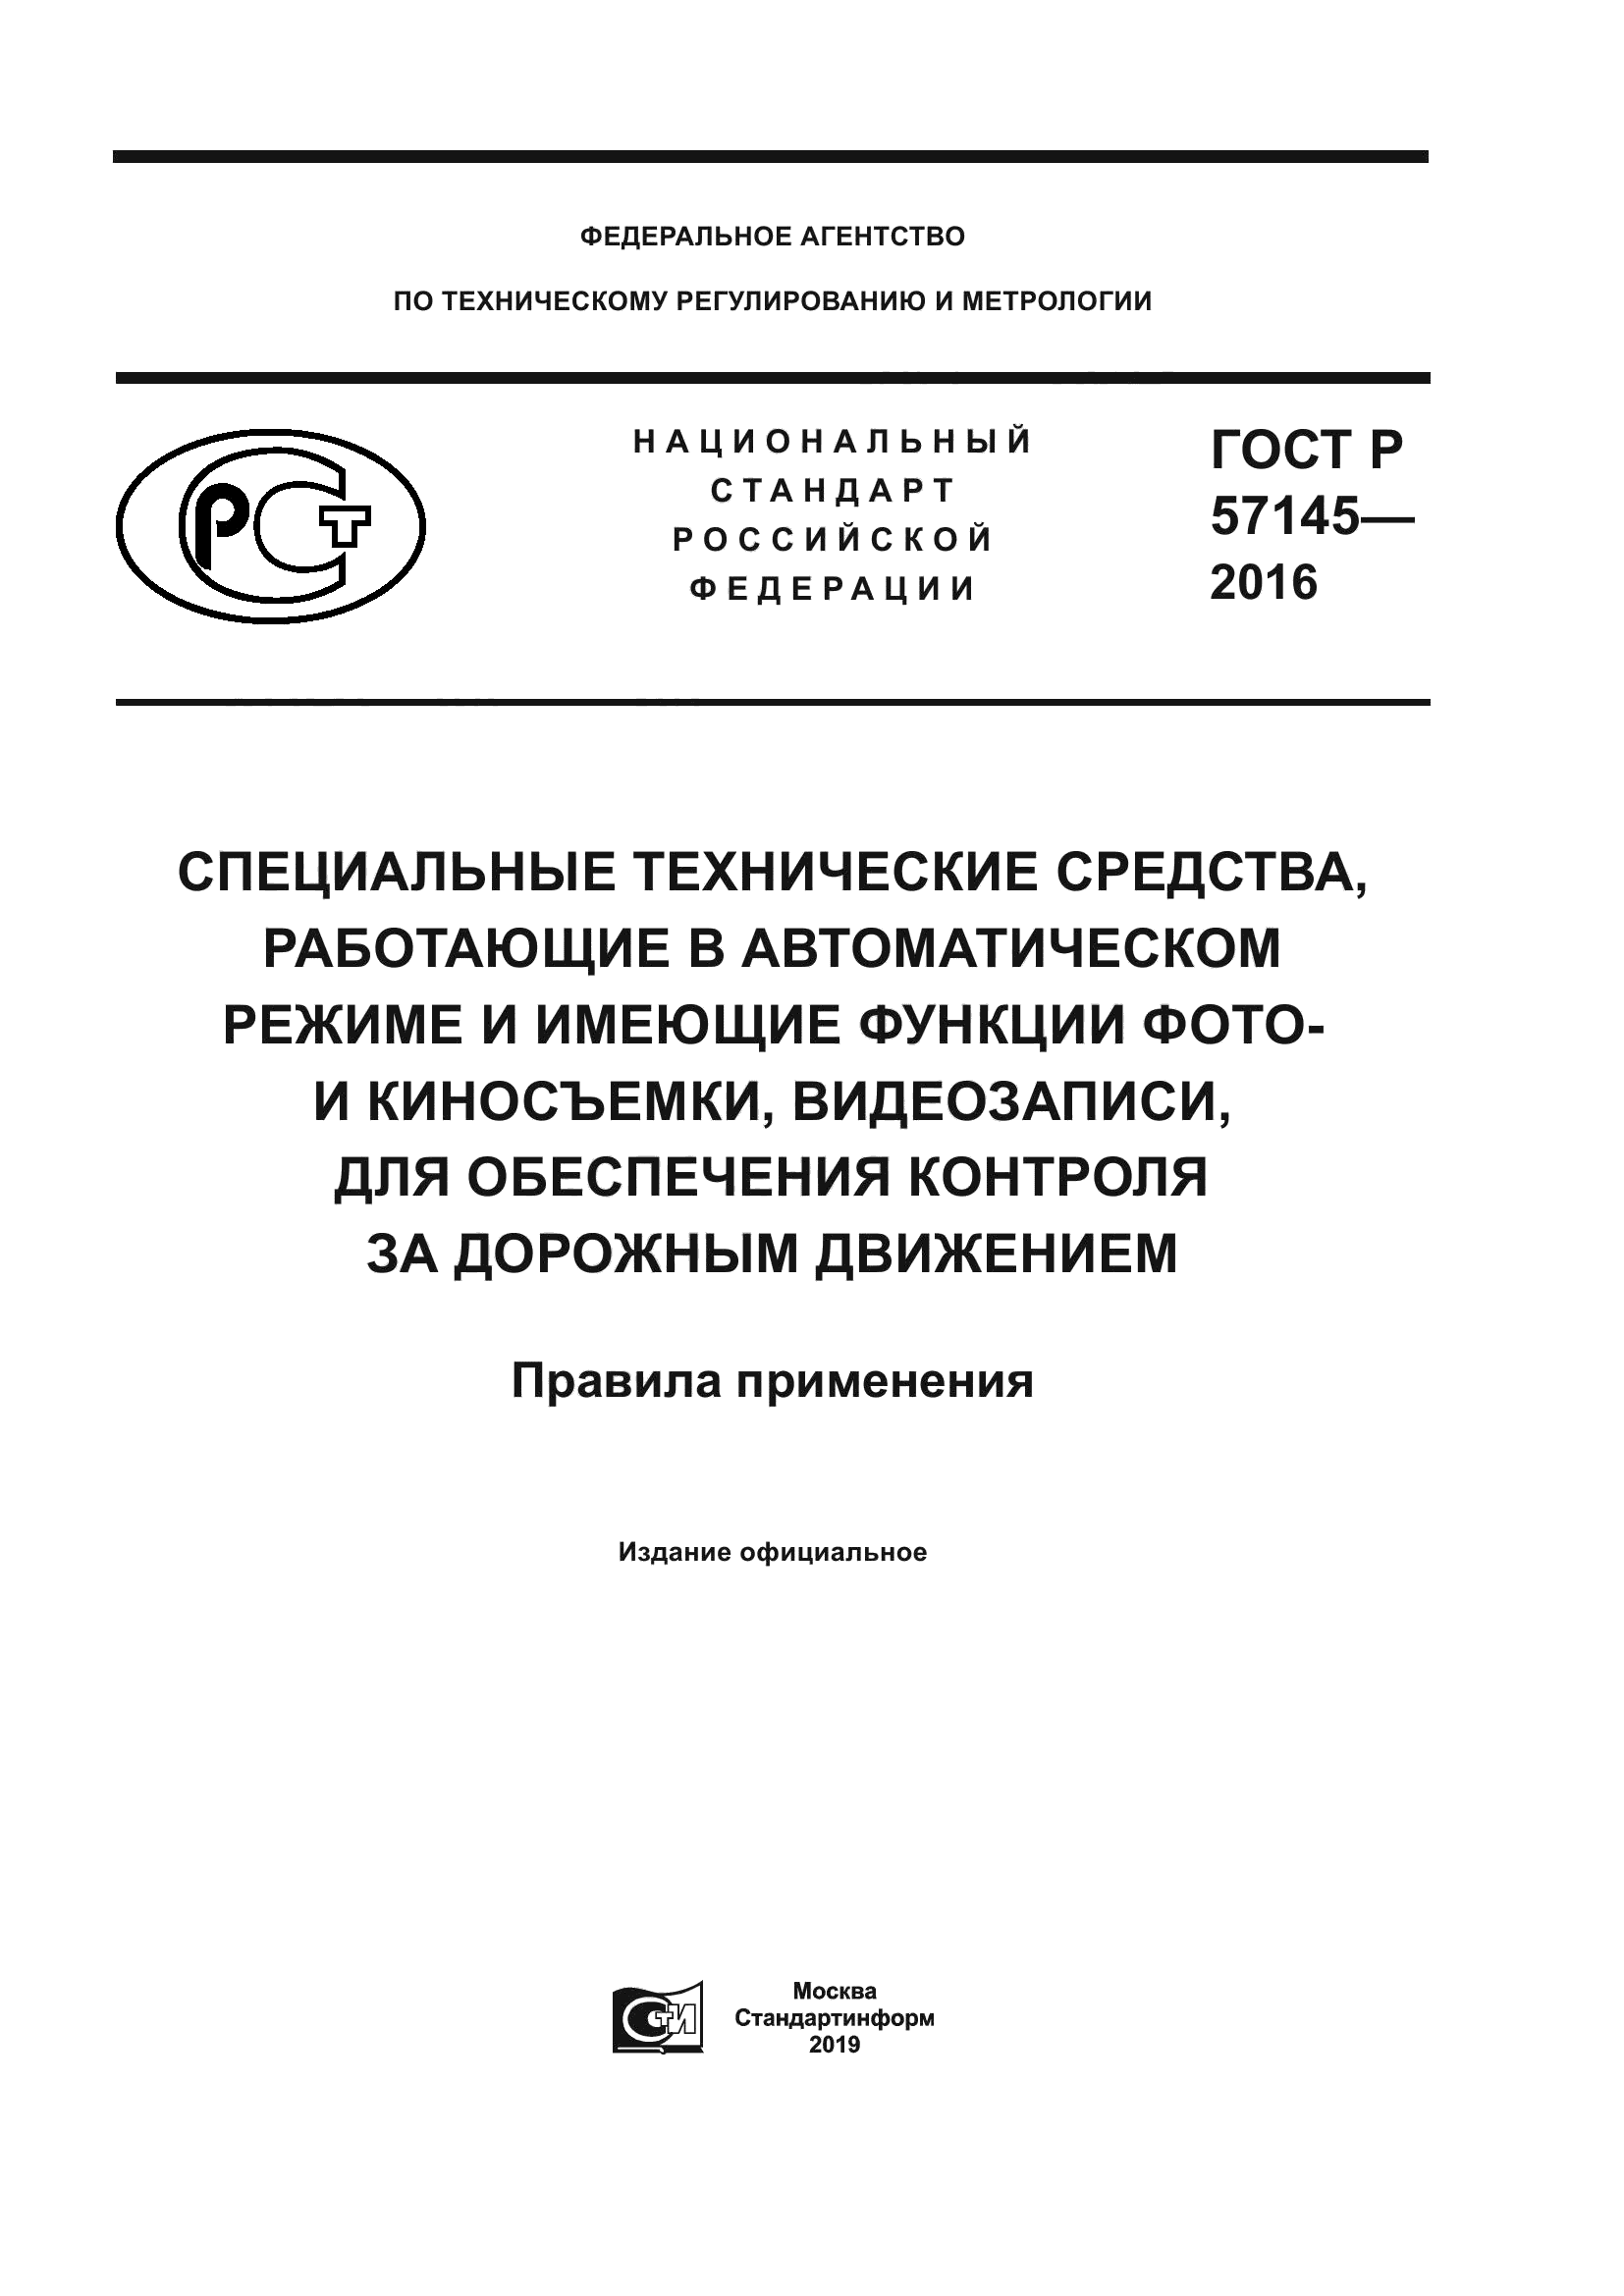 ГОСТ Р 57145-2016